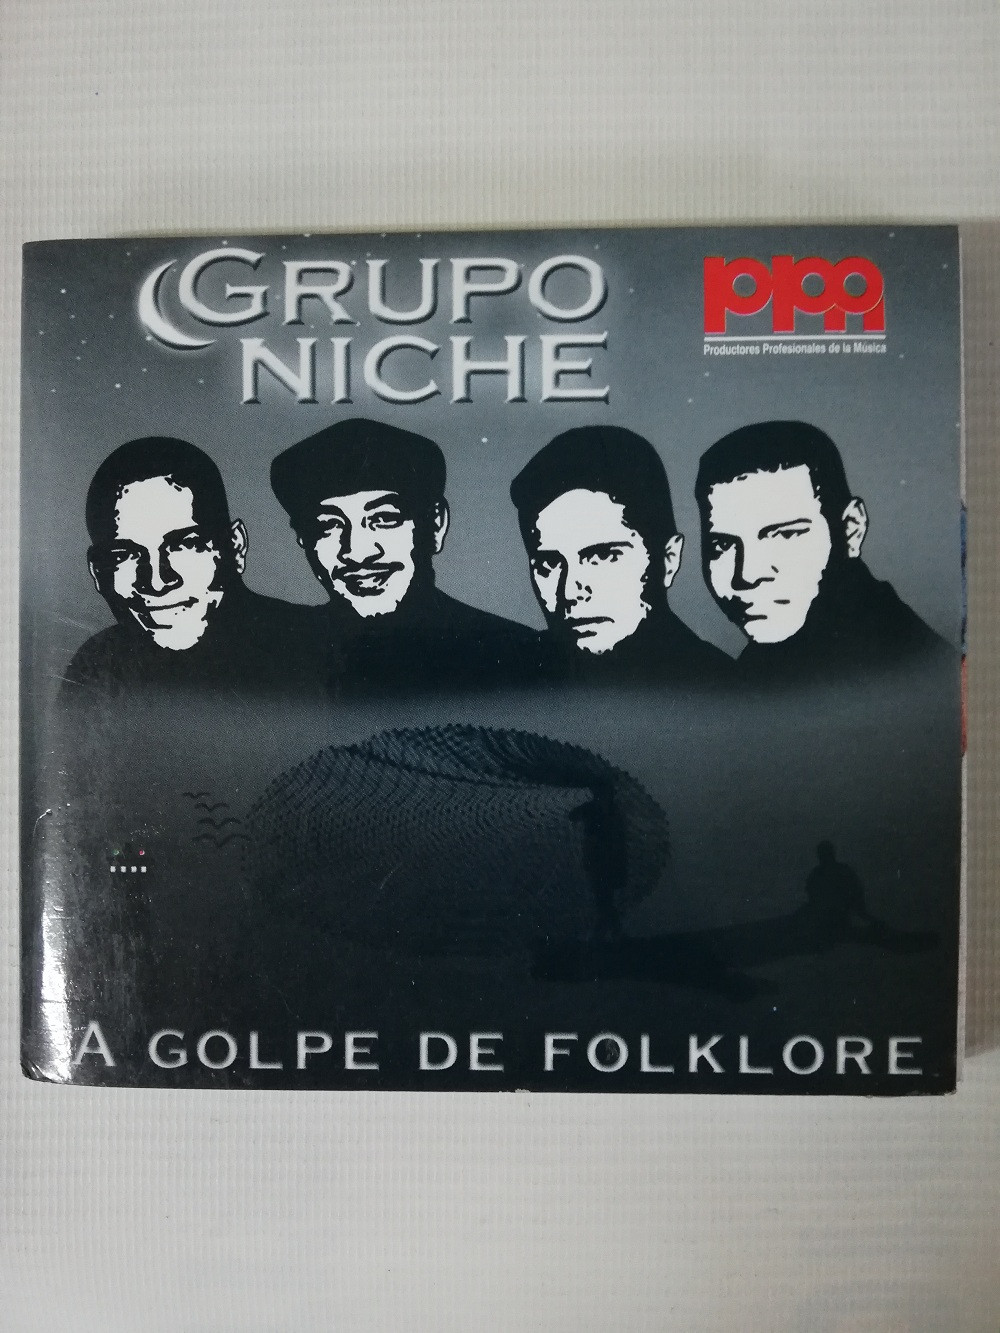 Imagen CD GRUPO NICHE - A GOLPE DE FOLKLORE 1